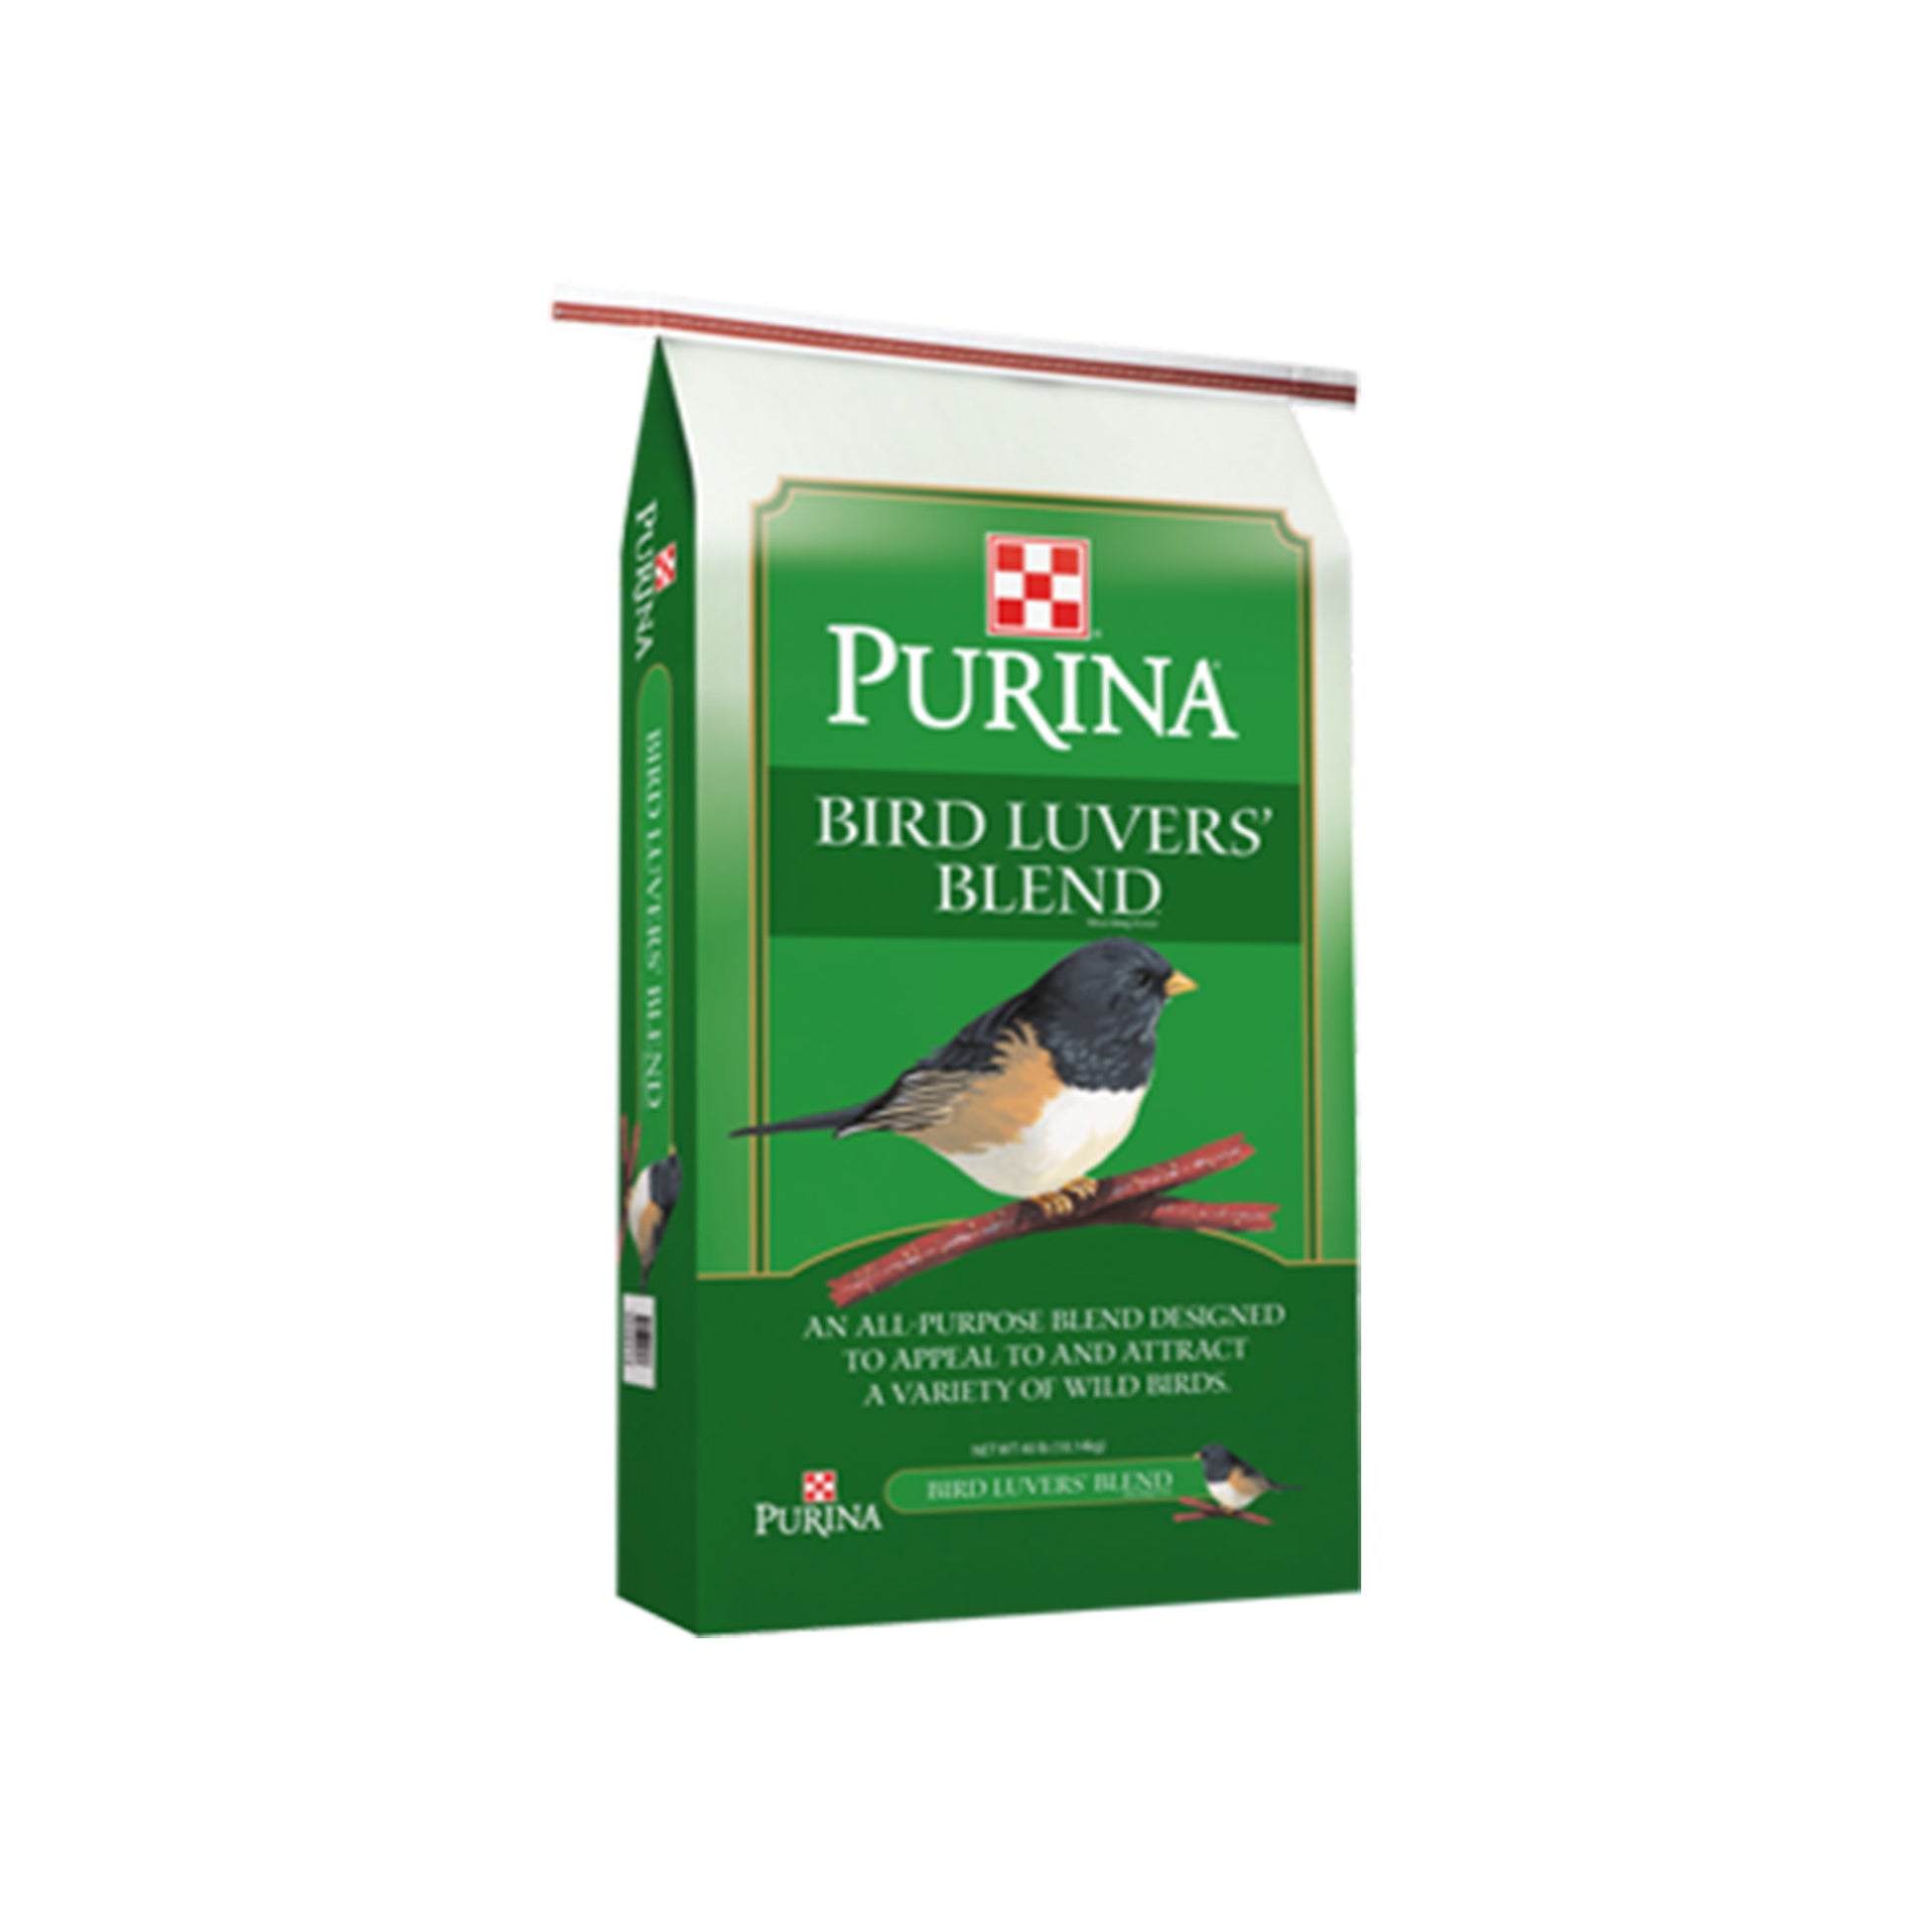 Purina Bird Luvers' Blend Wild Bird Food 40 Pound bag